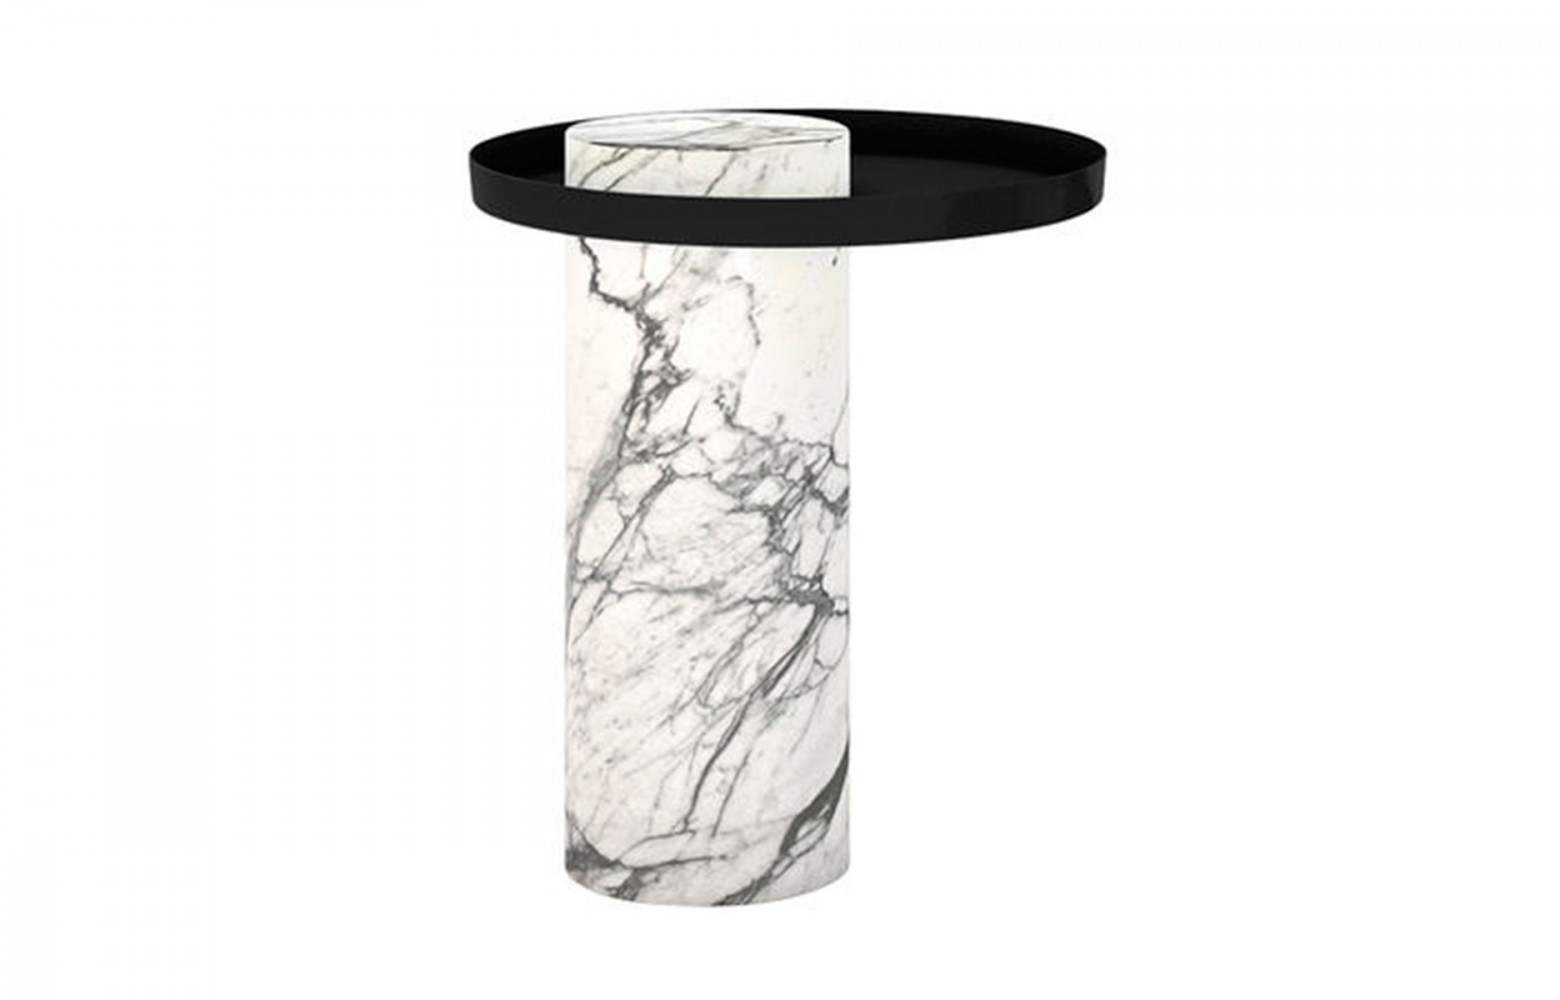 Table d’appoint « Salute », en marbre et métal, design Sebastian Herkner, La Chance.